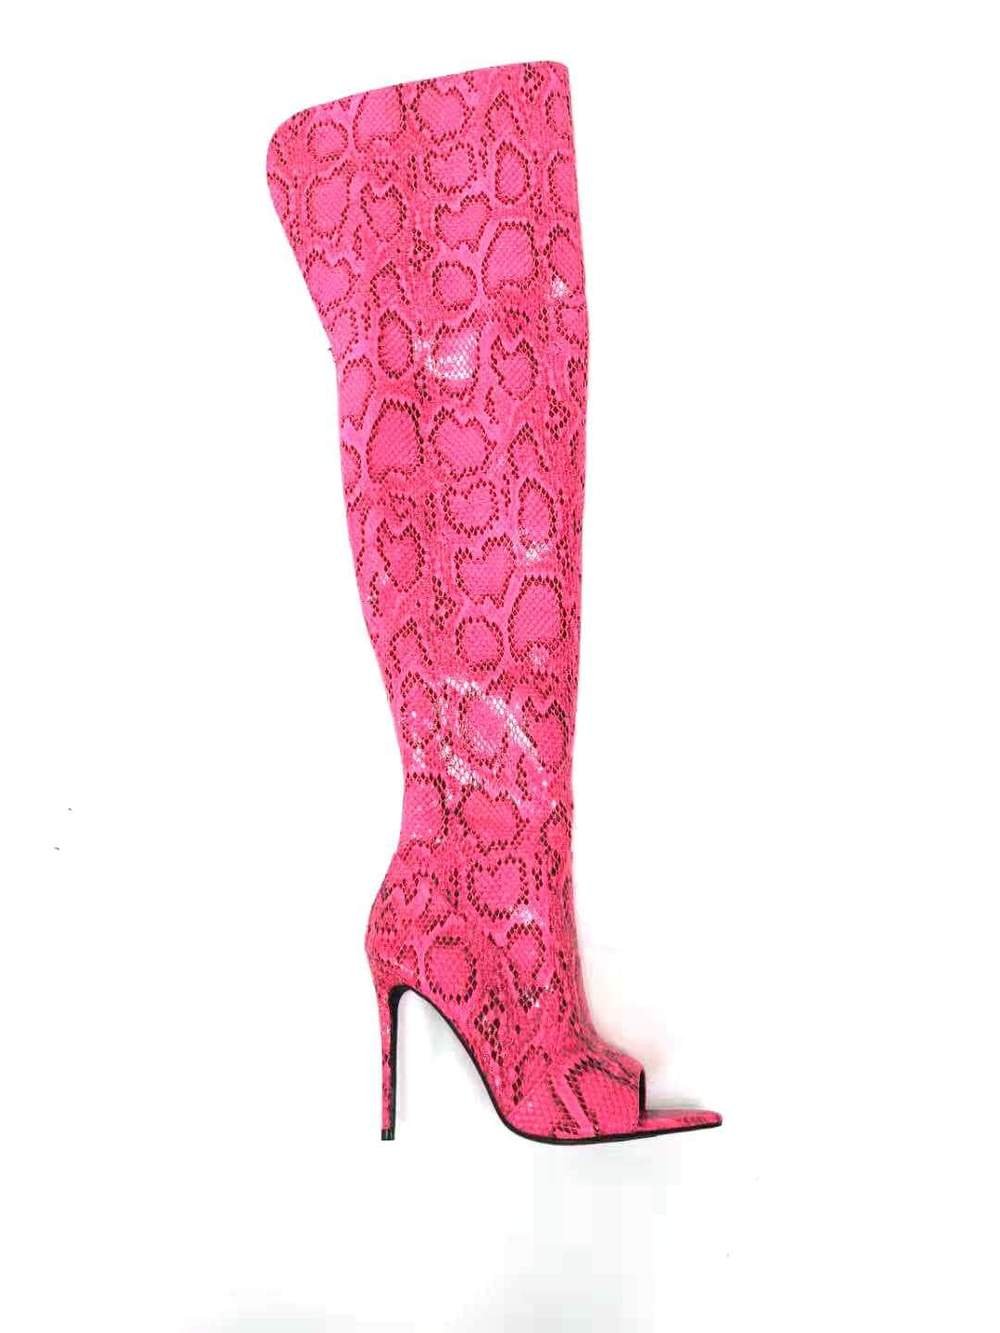 Attention Seeker Thigh High Boots (Pink 